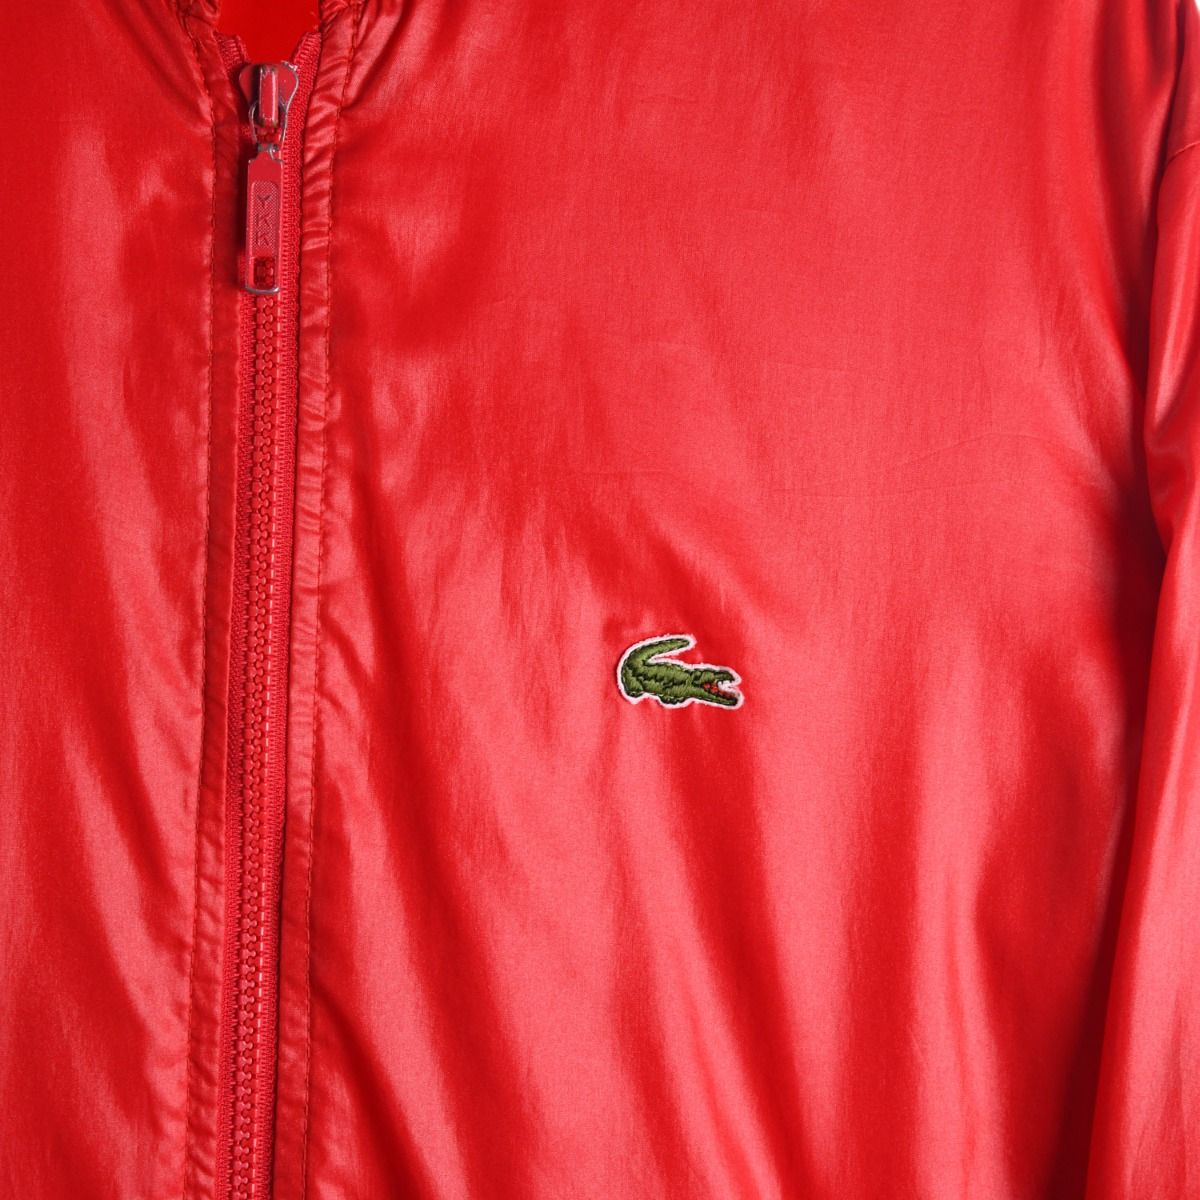 Lacoste IZOD 1980s Shell Jacket